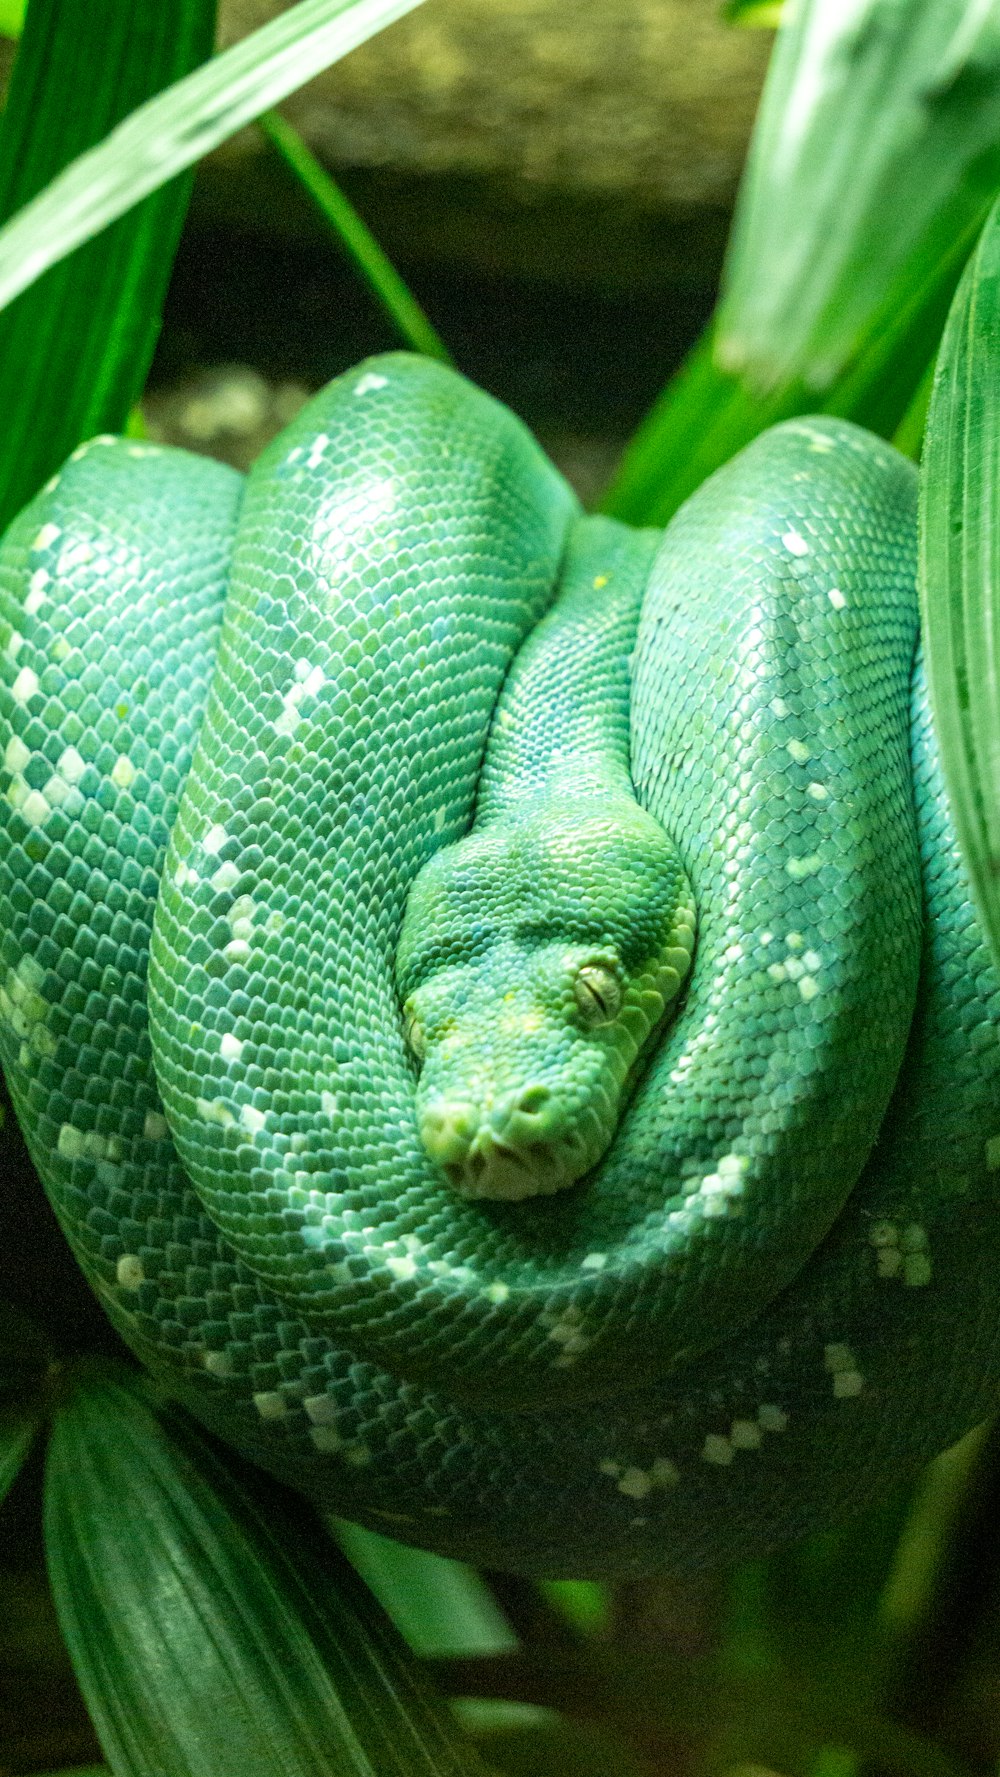 green snake on tree branch